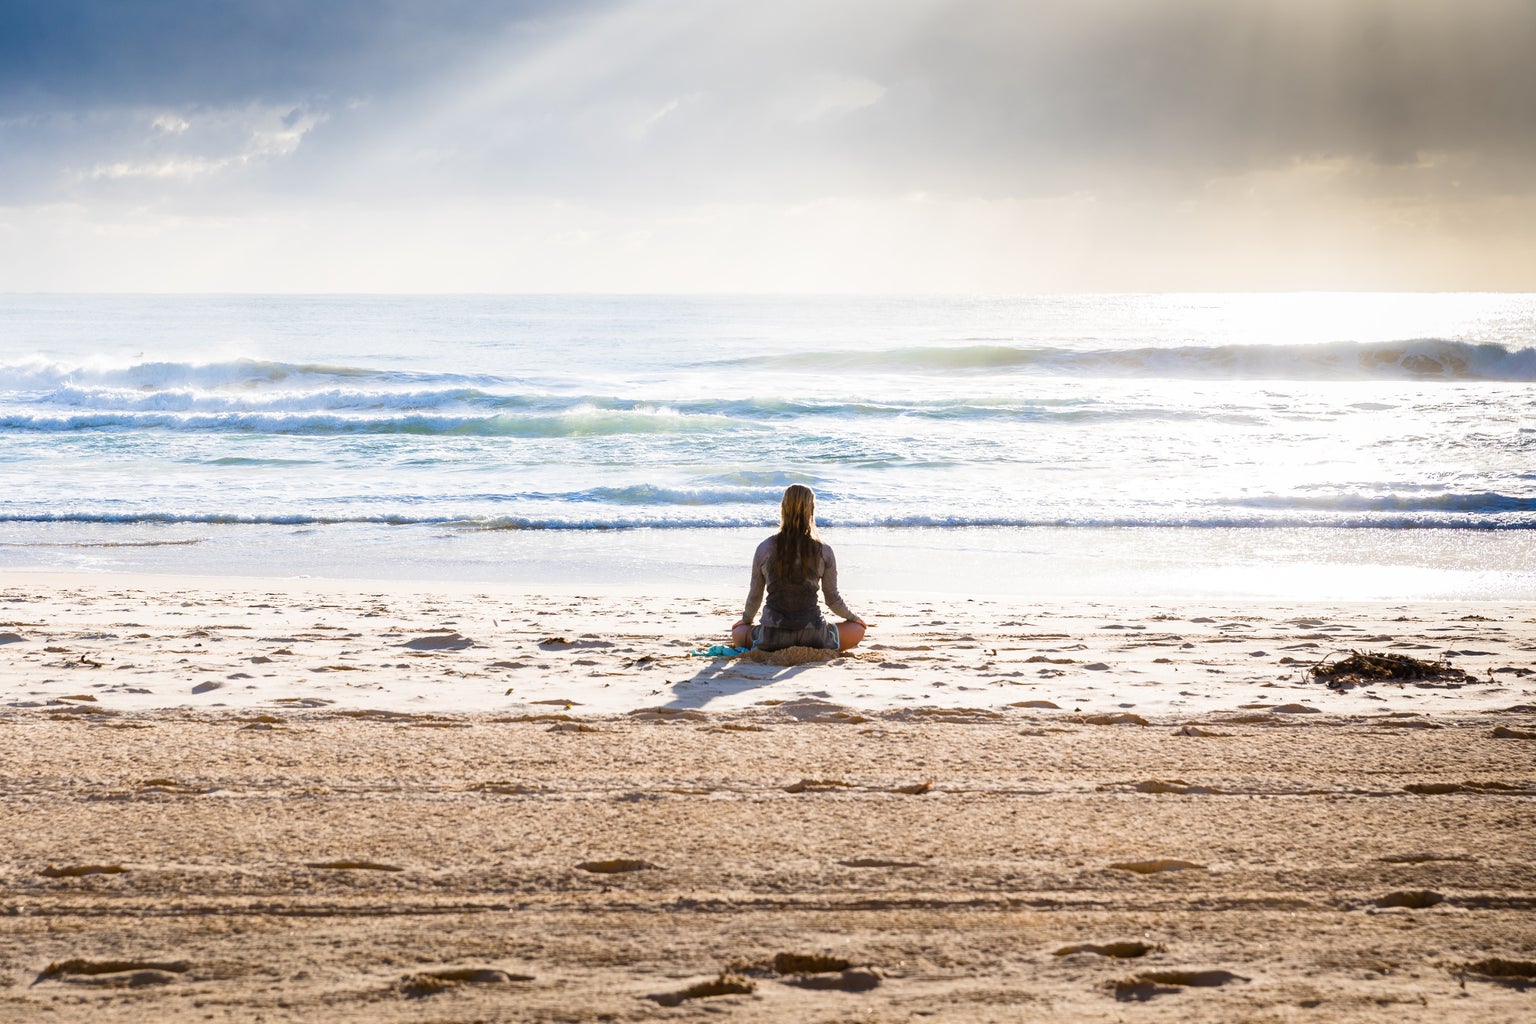 woman meditating on the beach